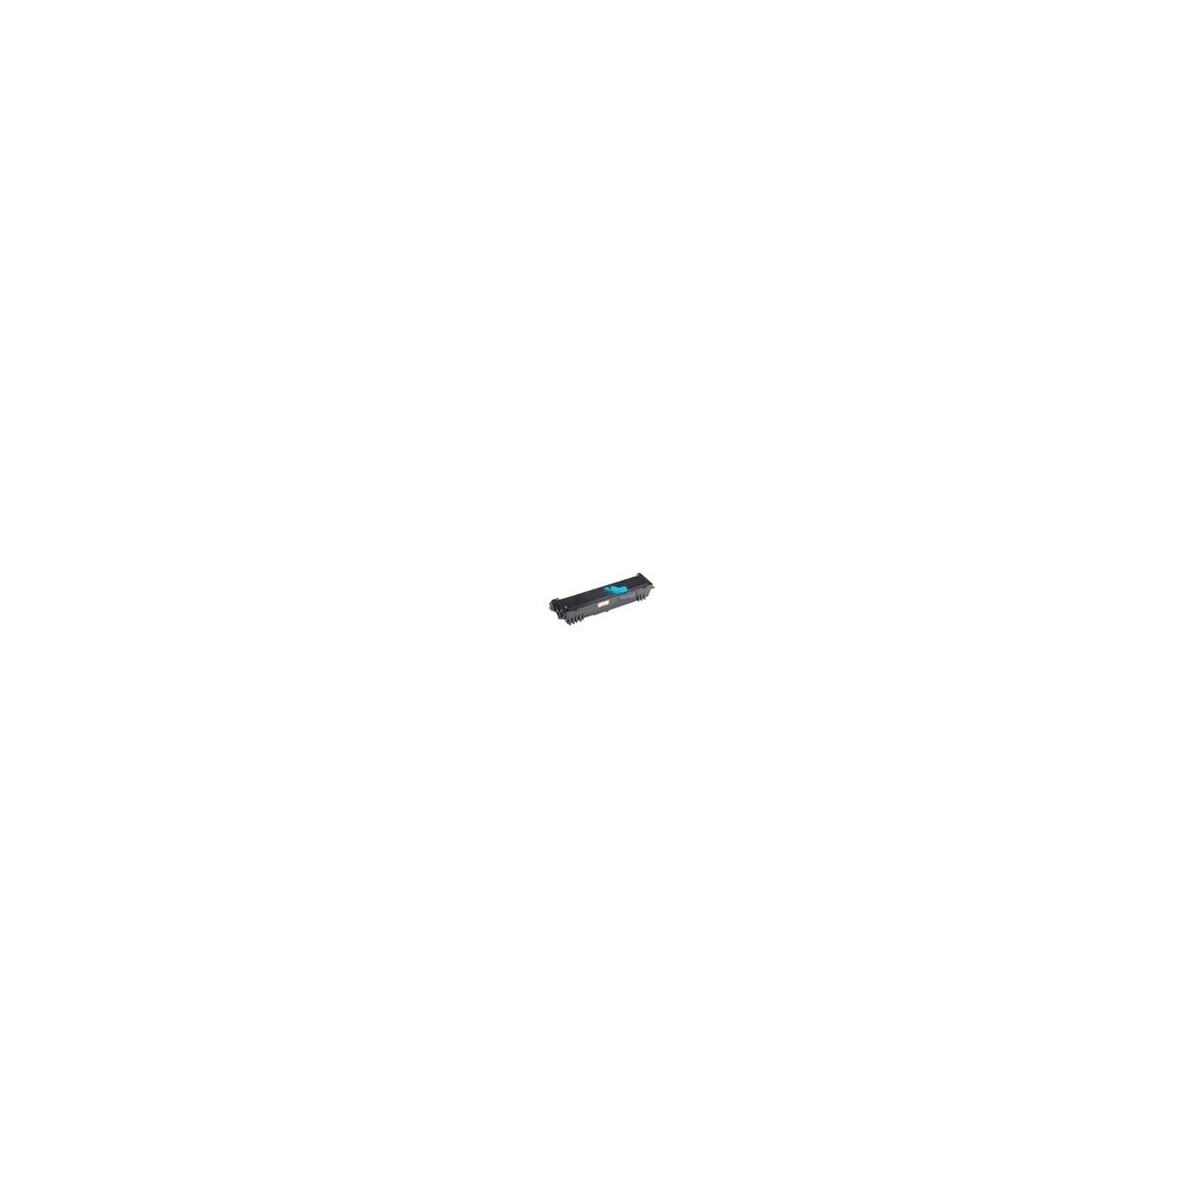 Konica Minolta Toner Cartridge Std Cap for PagePro 1300W - 3000 pages - Black